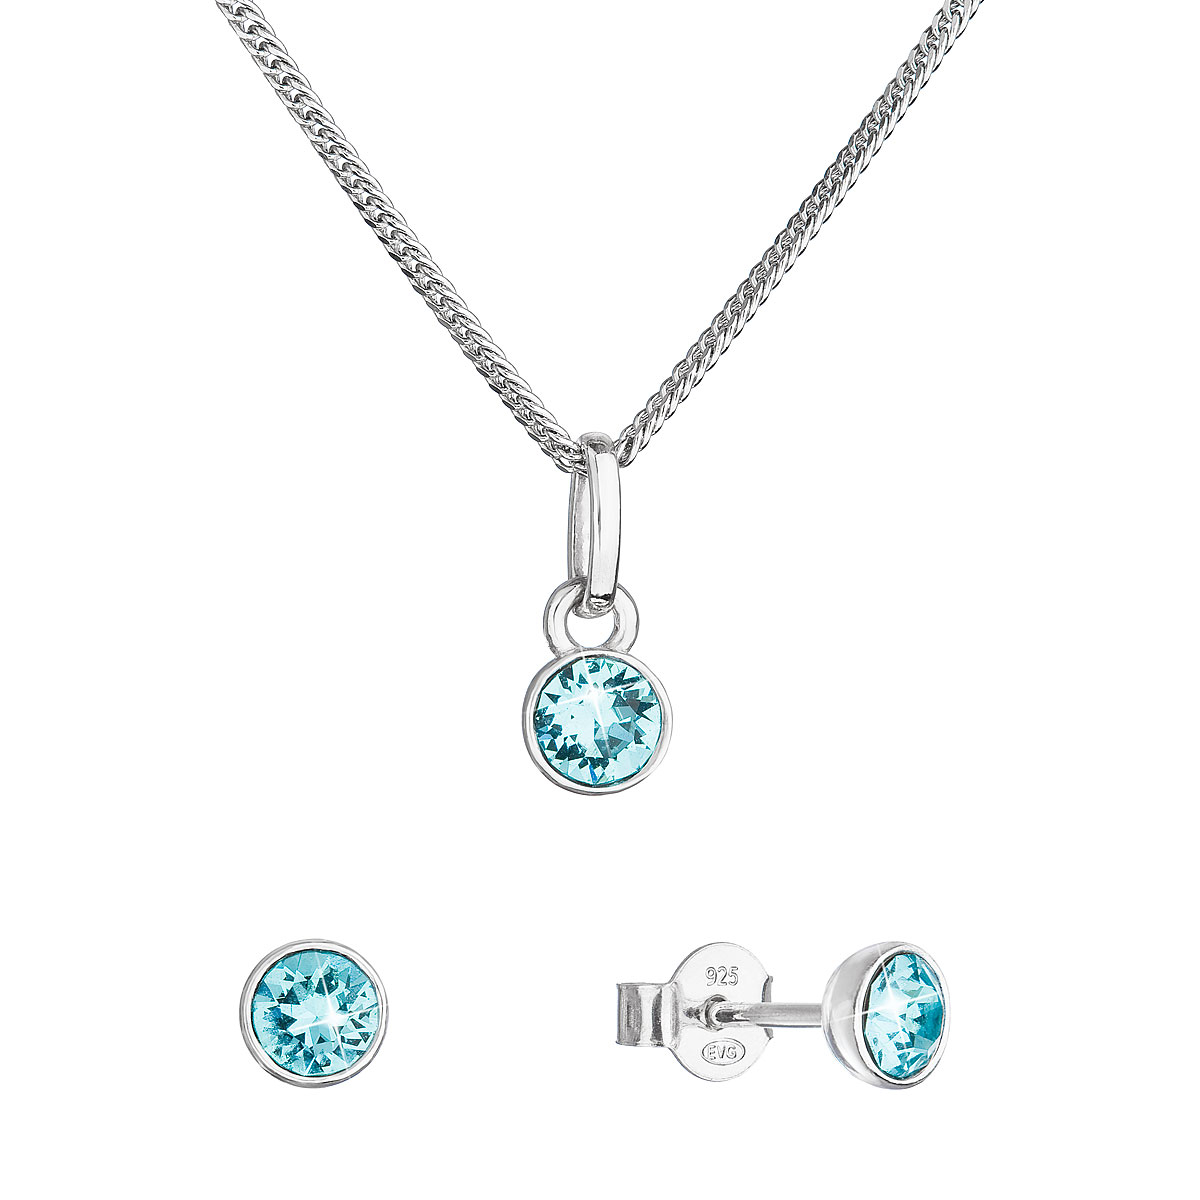 Súprava šperkov s kryštálmi Swarovski náušnice a náhrdelník, Turquoise